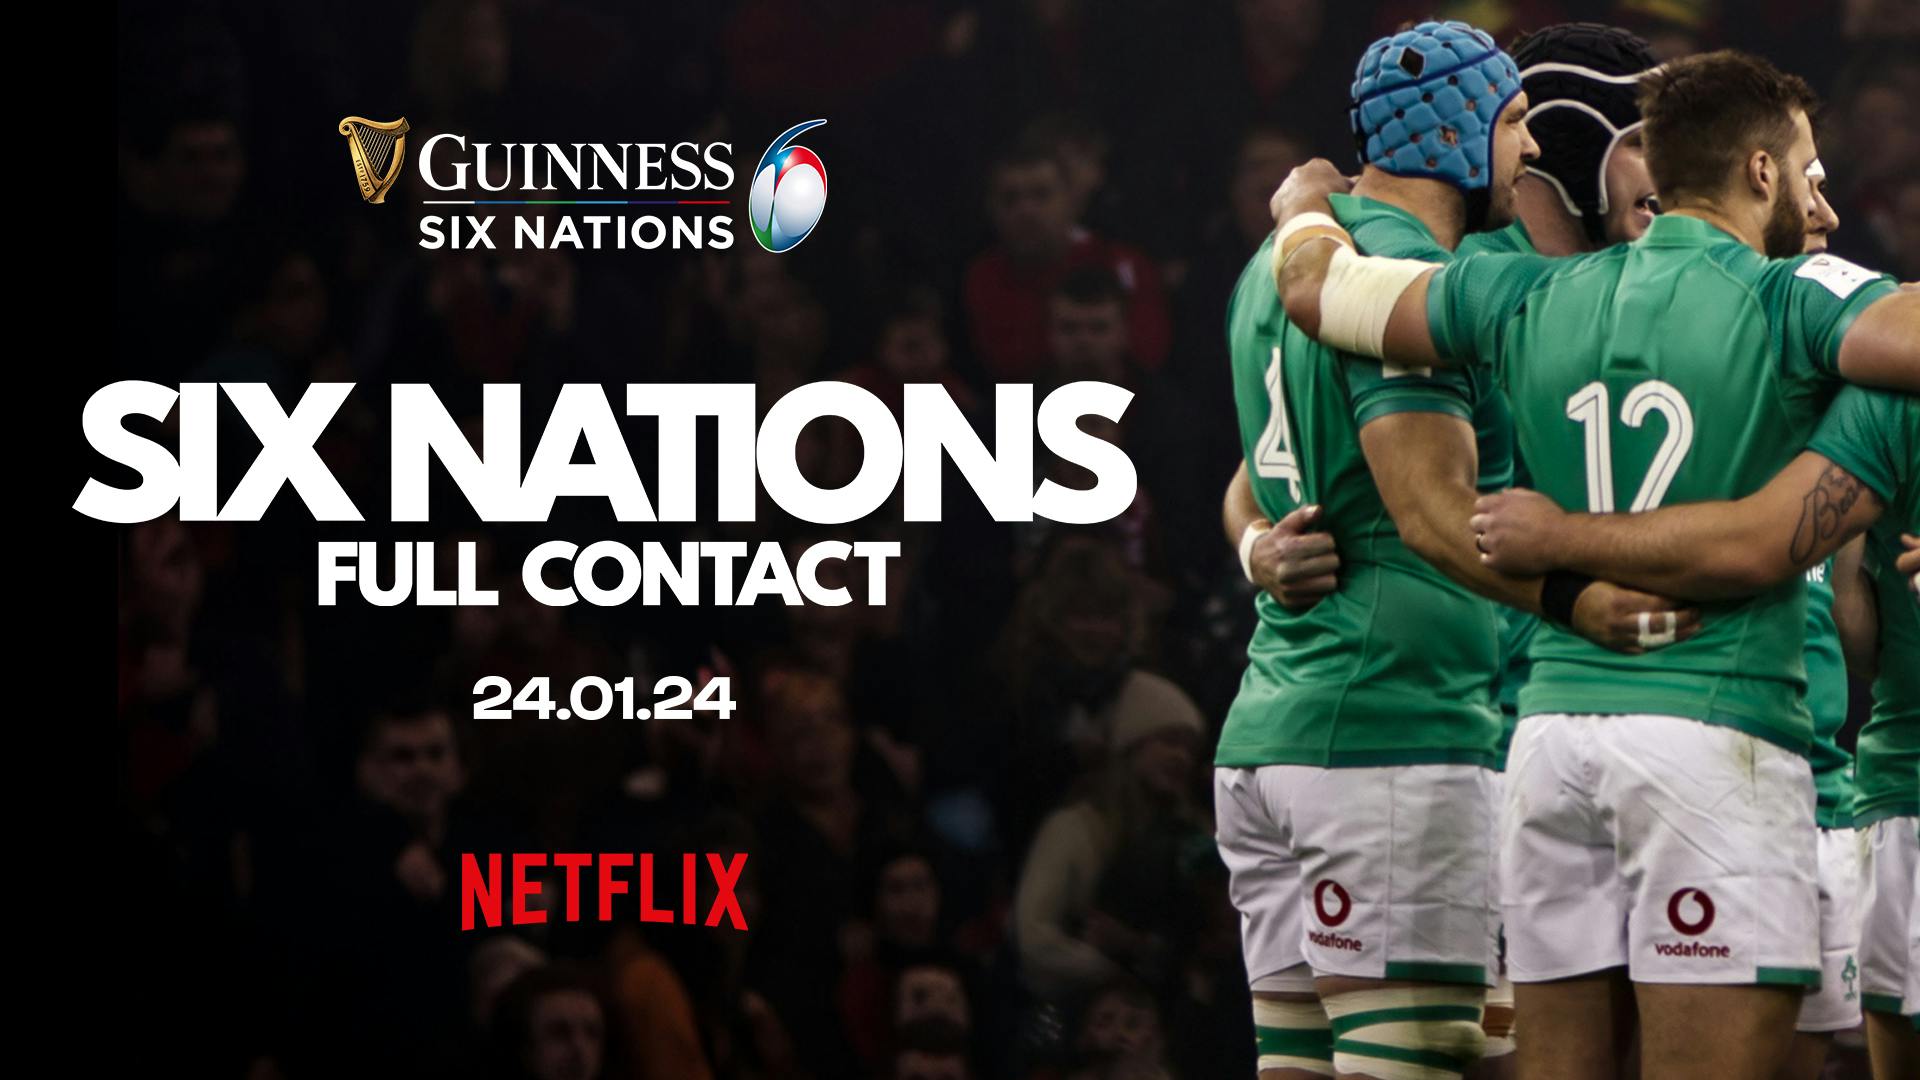 Netflix's 'Six Nations: Full Contact' Trailer (ITA)